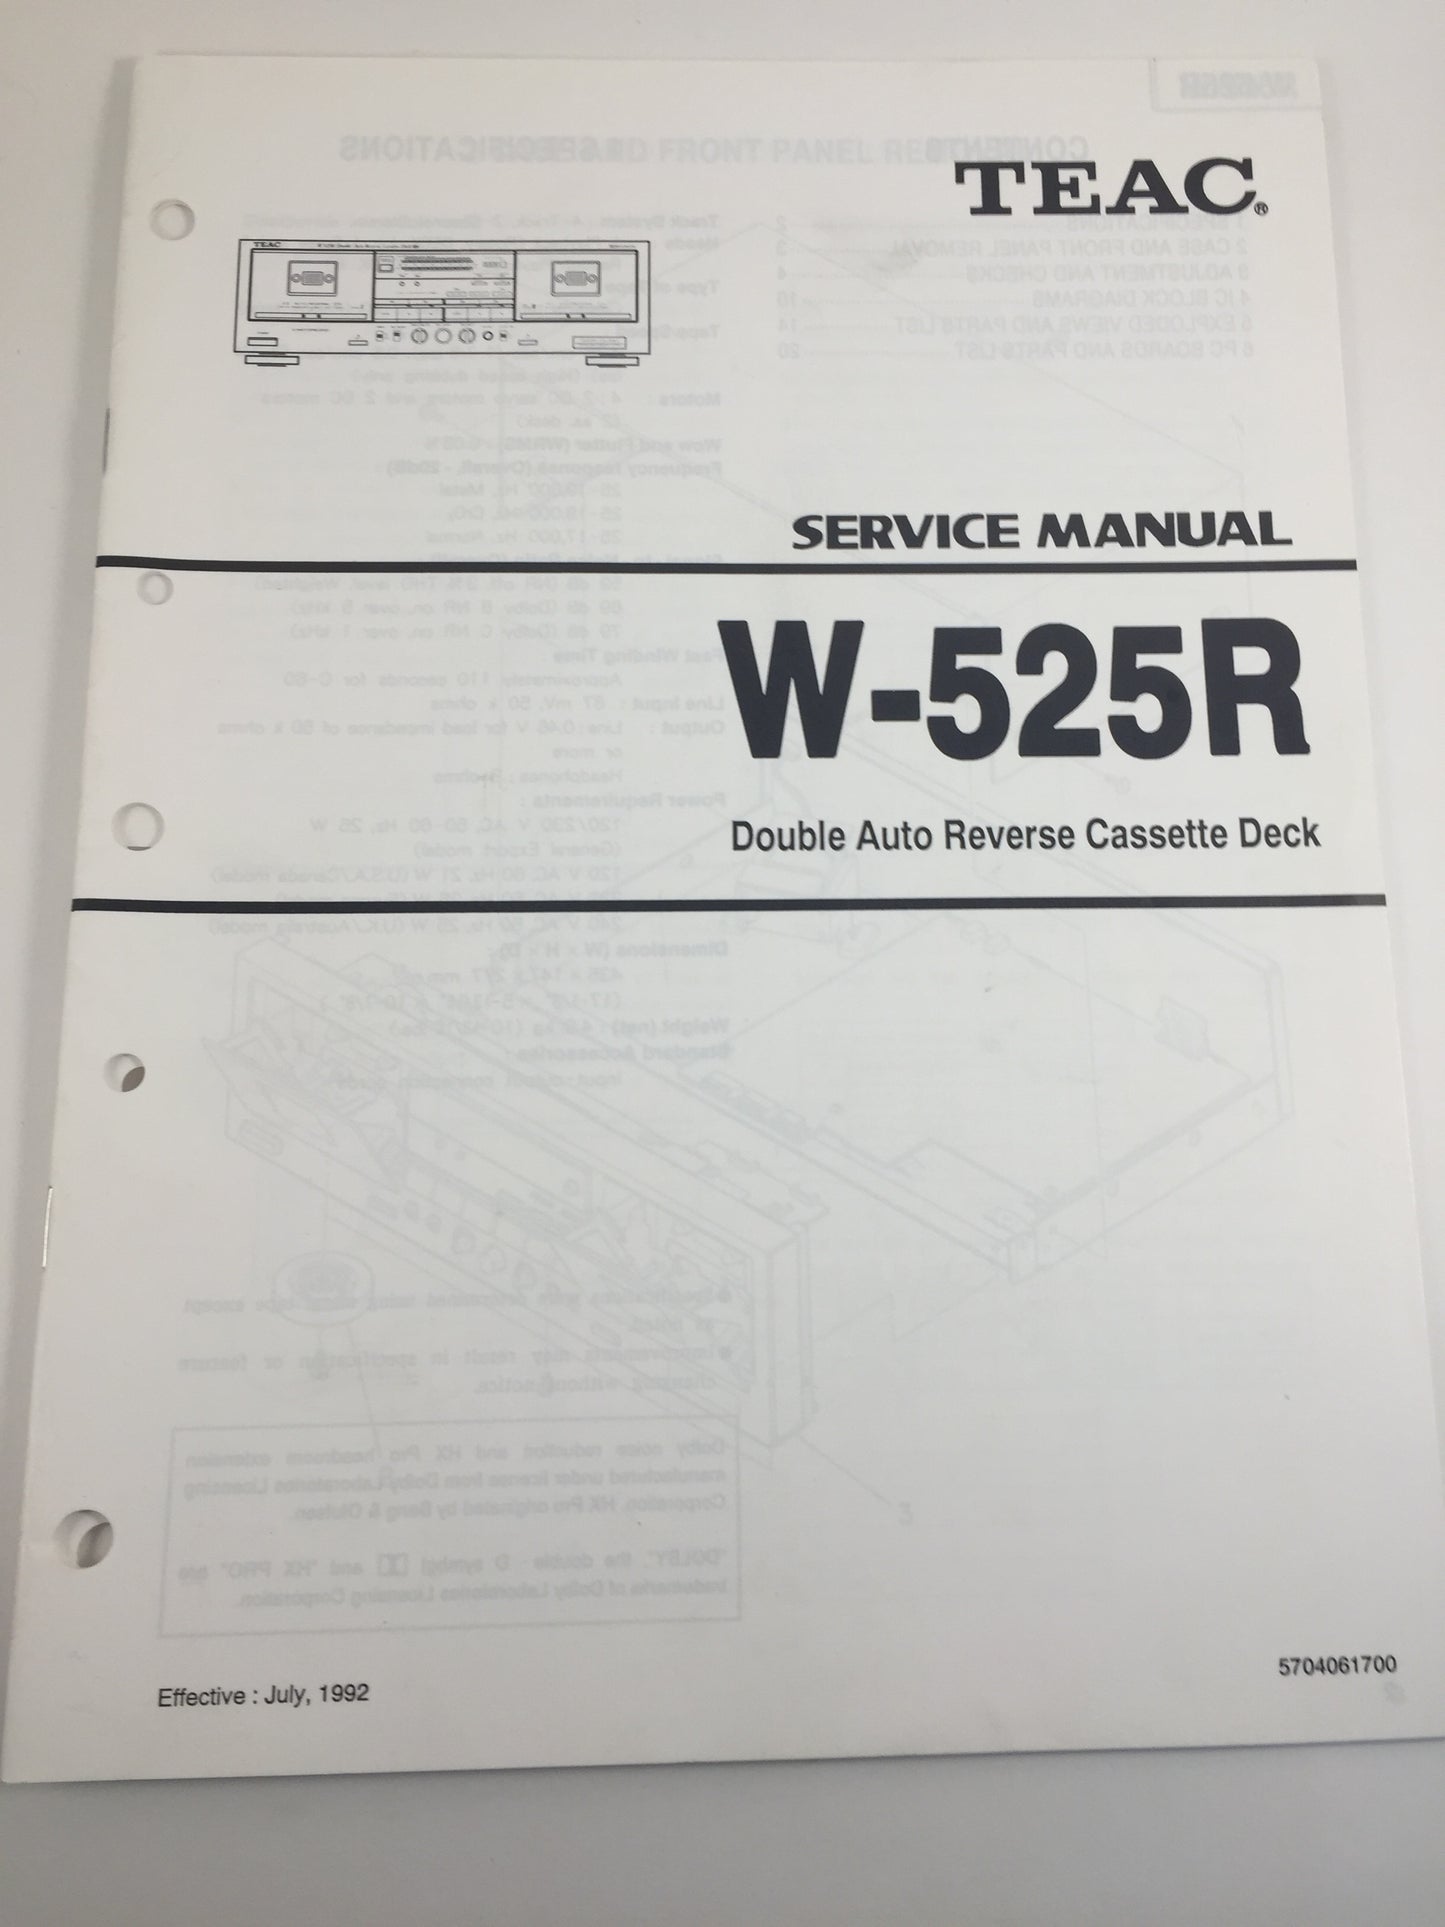 Teac W-525R Double Auto Reverse Cassette Deck Service Manual